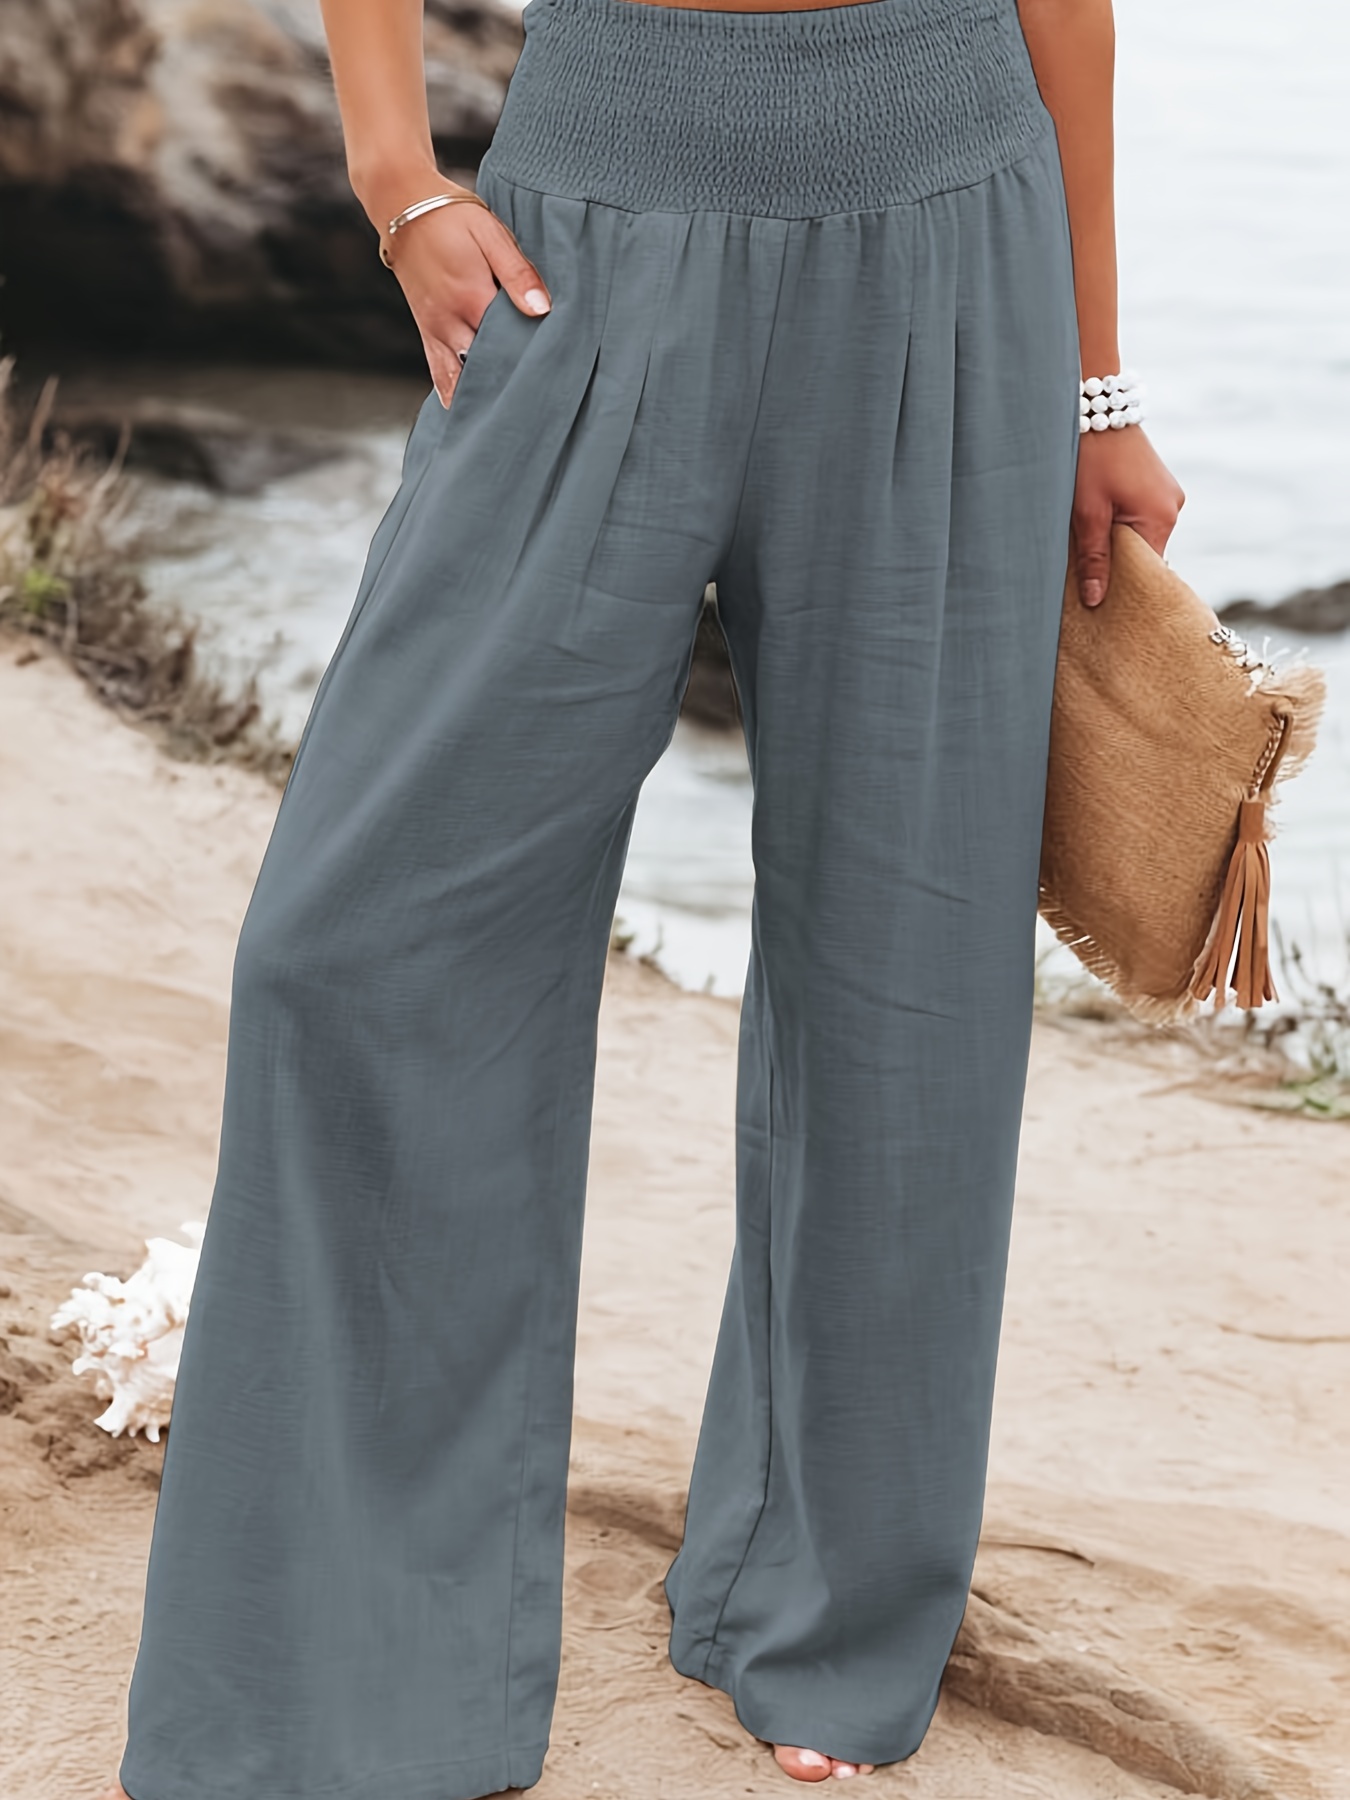 QPGVBP Woman 's Casual Full-Length Loose Pants, Botswana